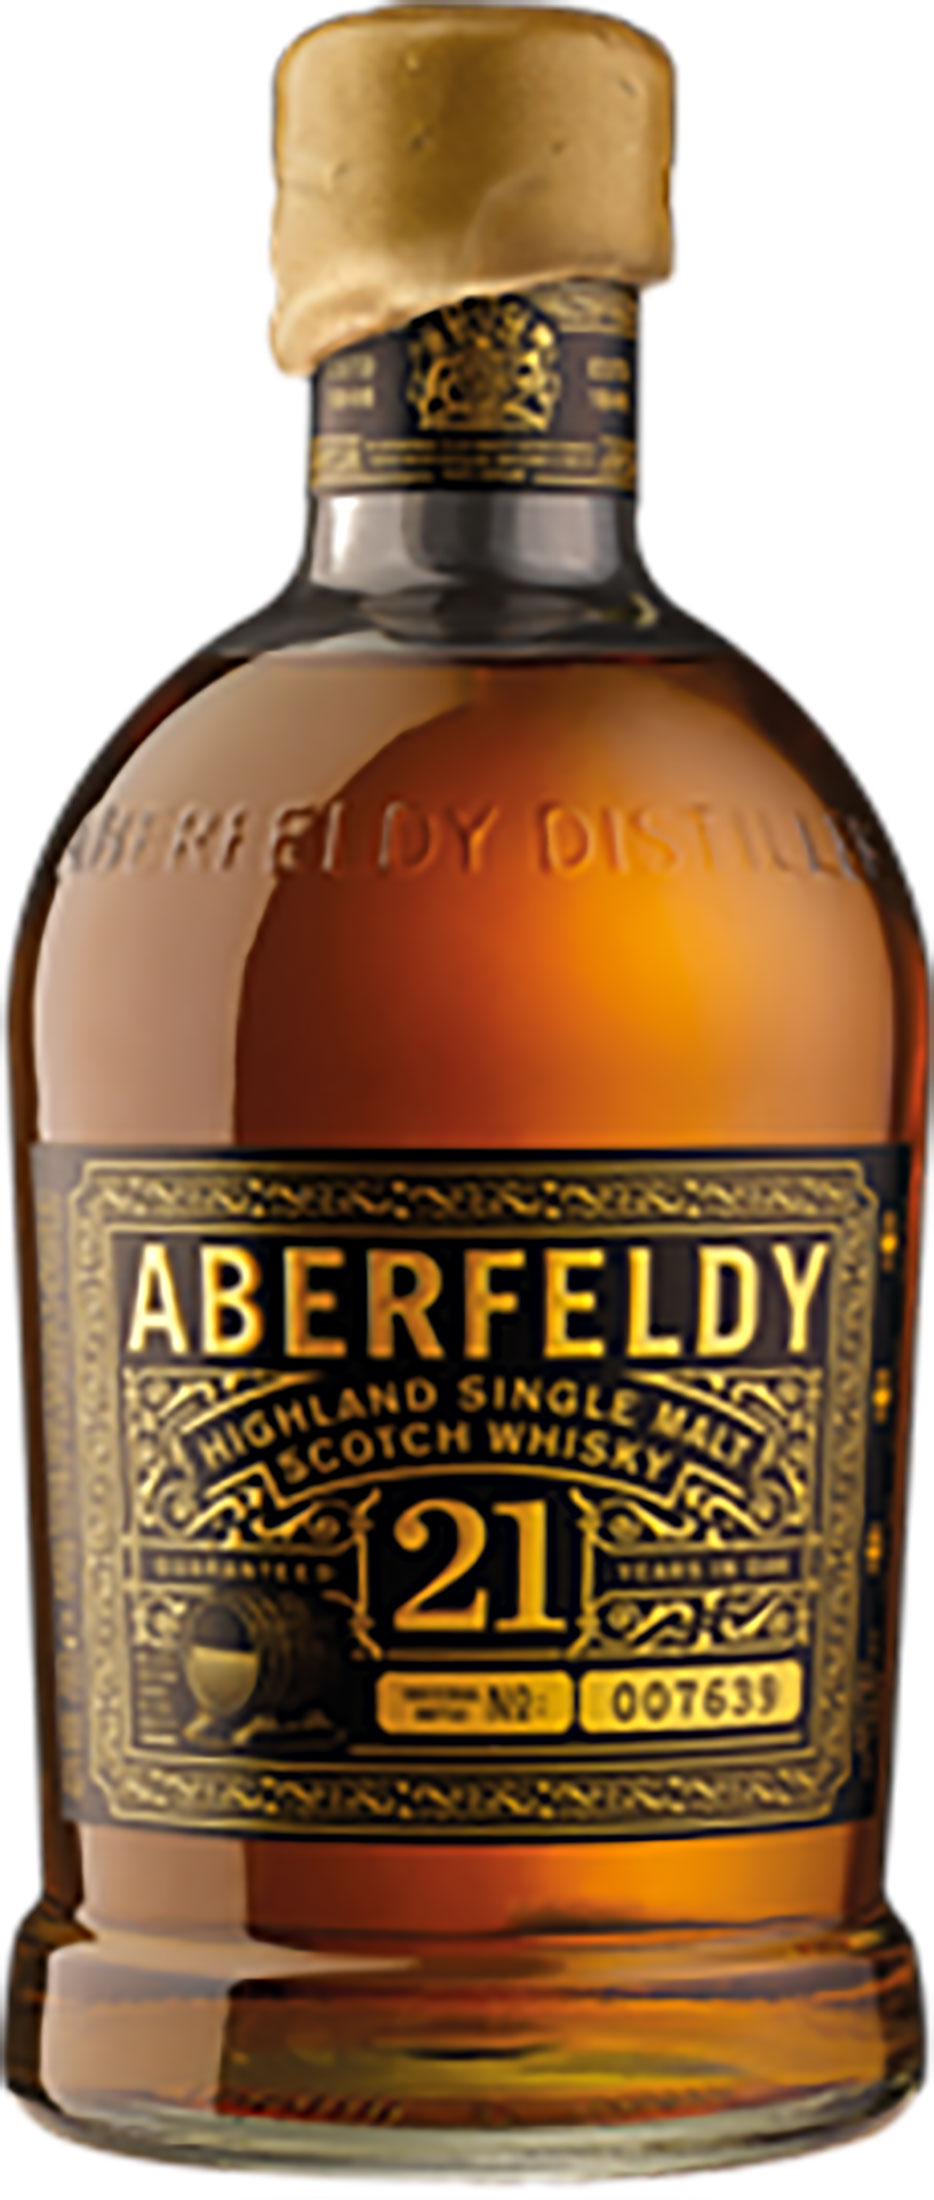 Aberfeldy Highland Single Malt Scotch Whisky 21 Anni